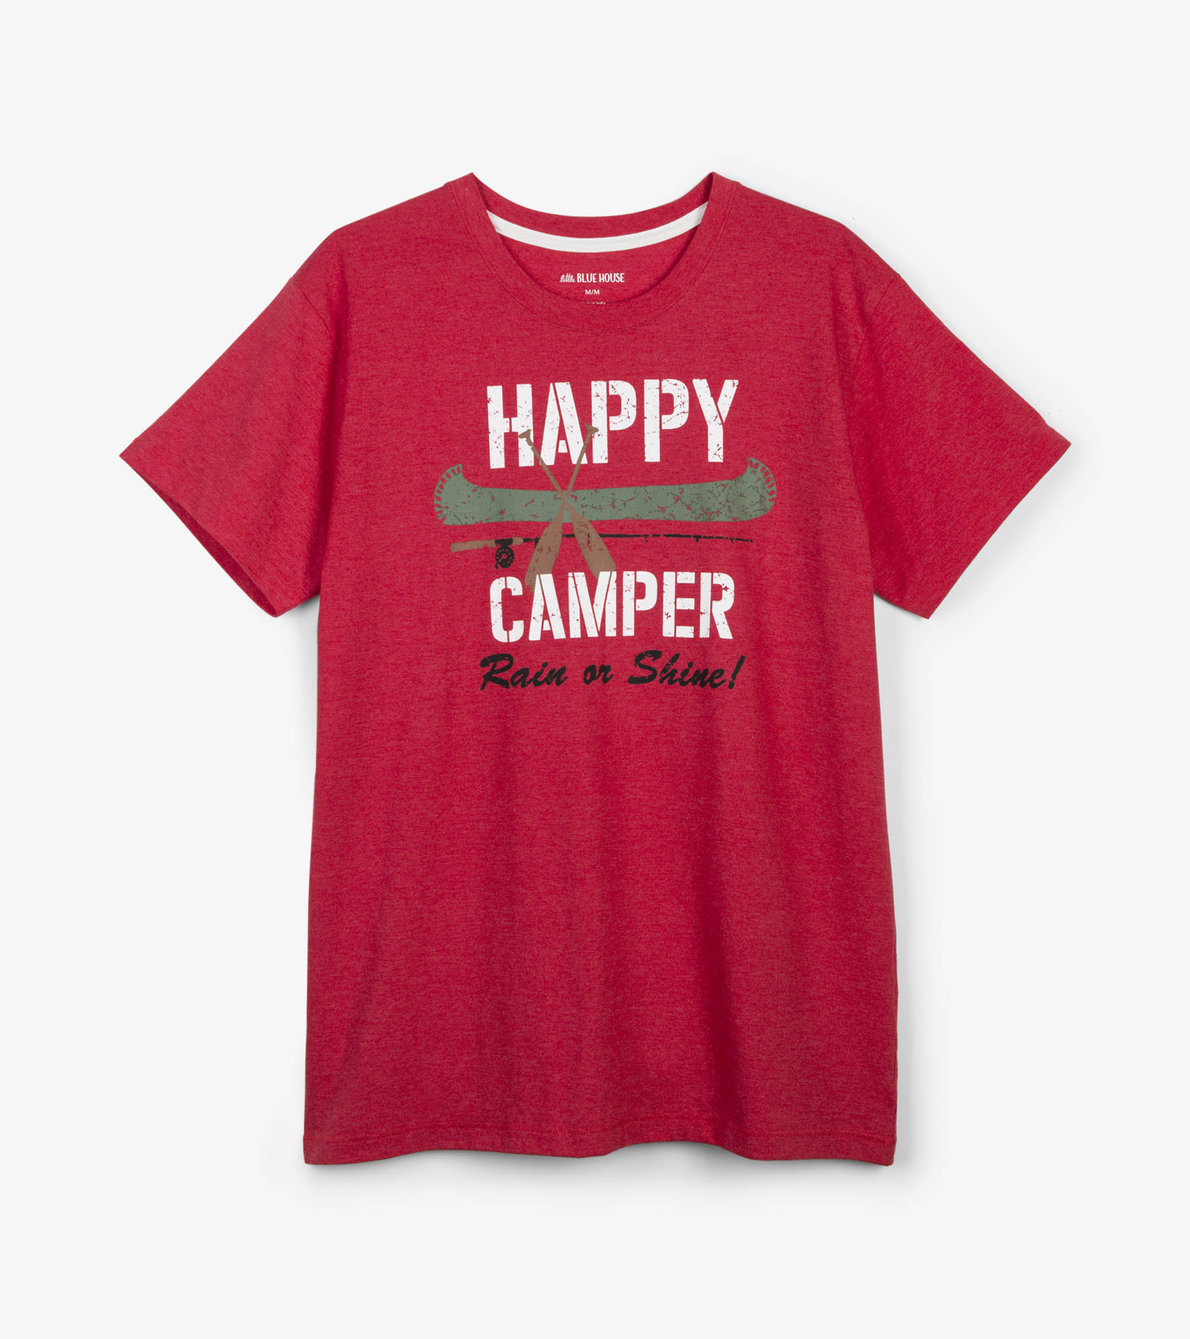 View larger image of Happy Camper Men's Tee